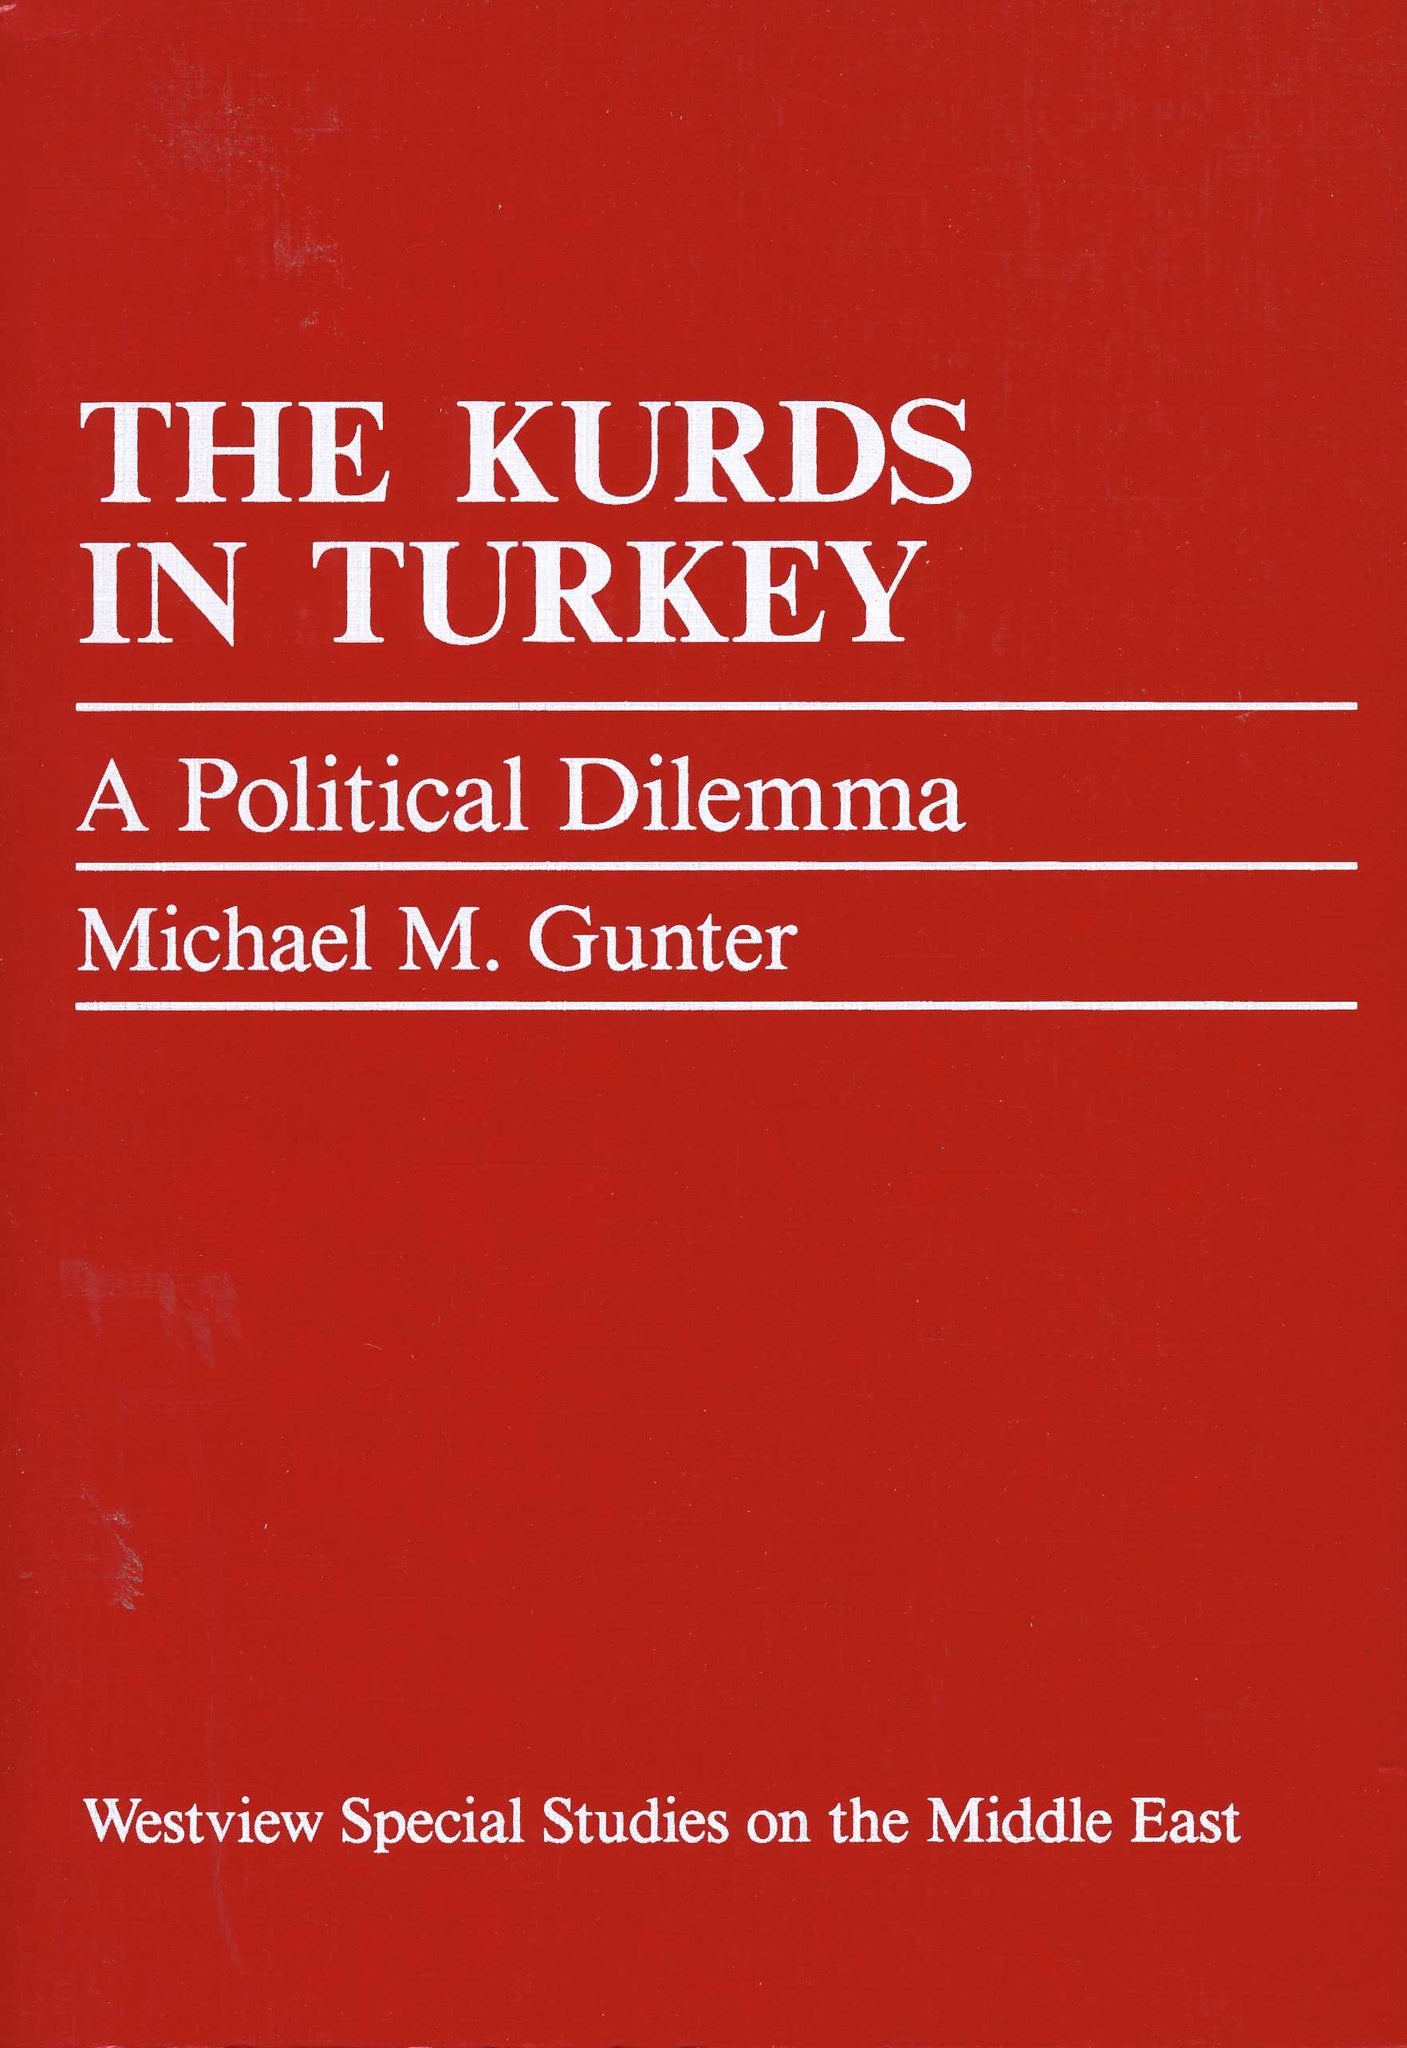 KURDS IN TURKEY: A Political Dilemma